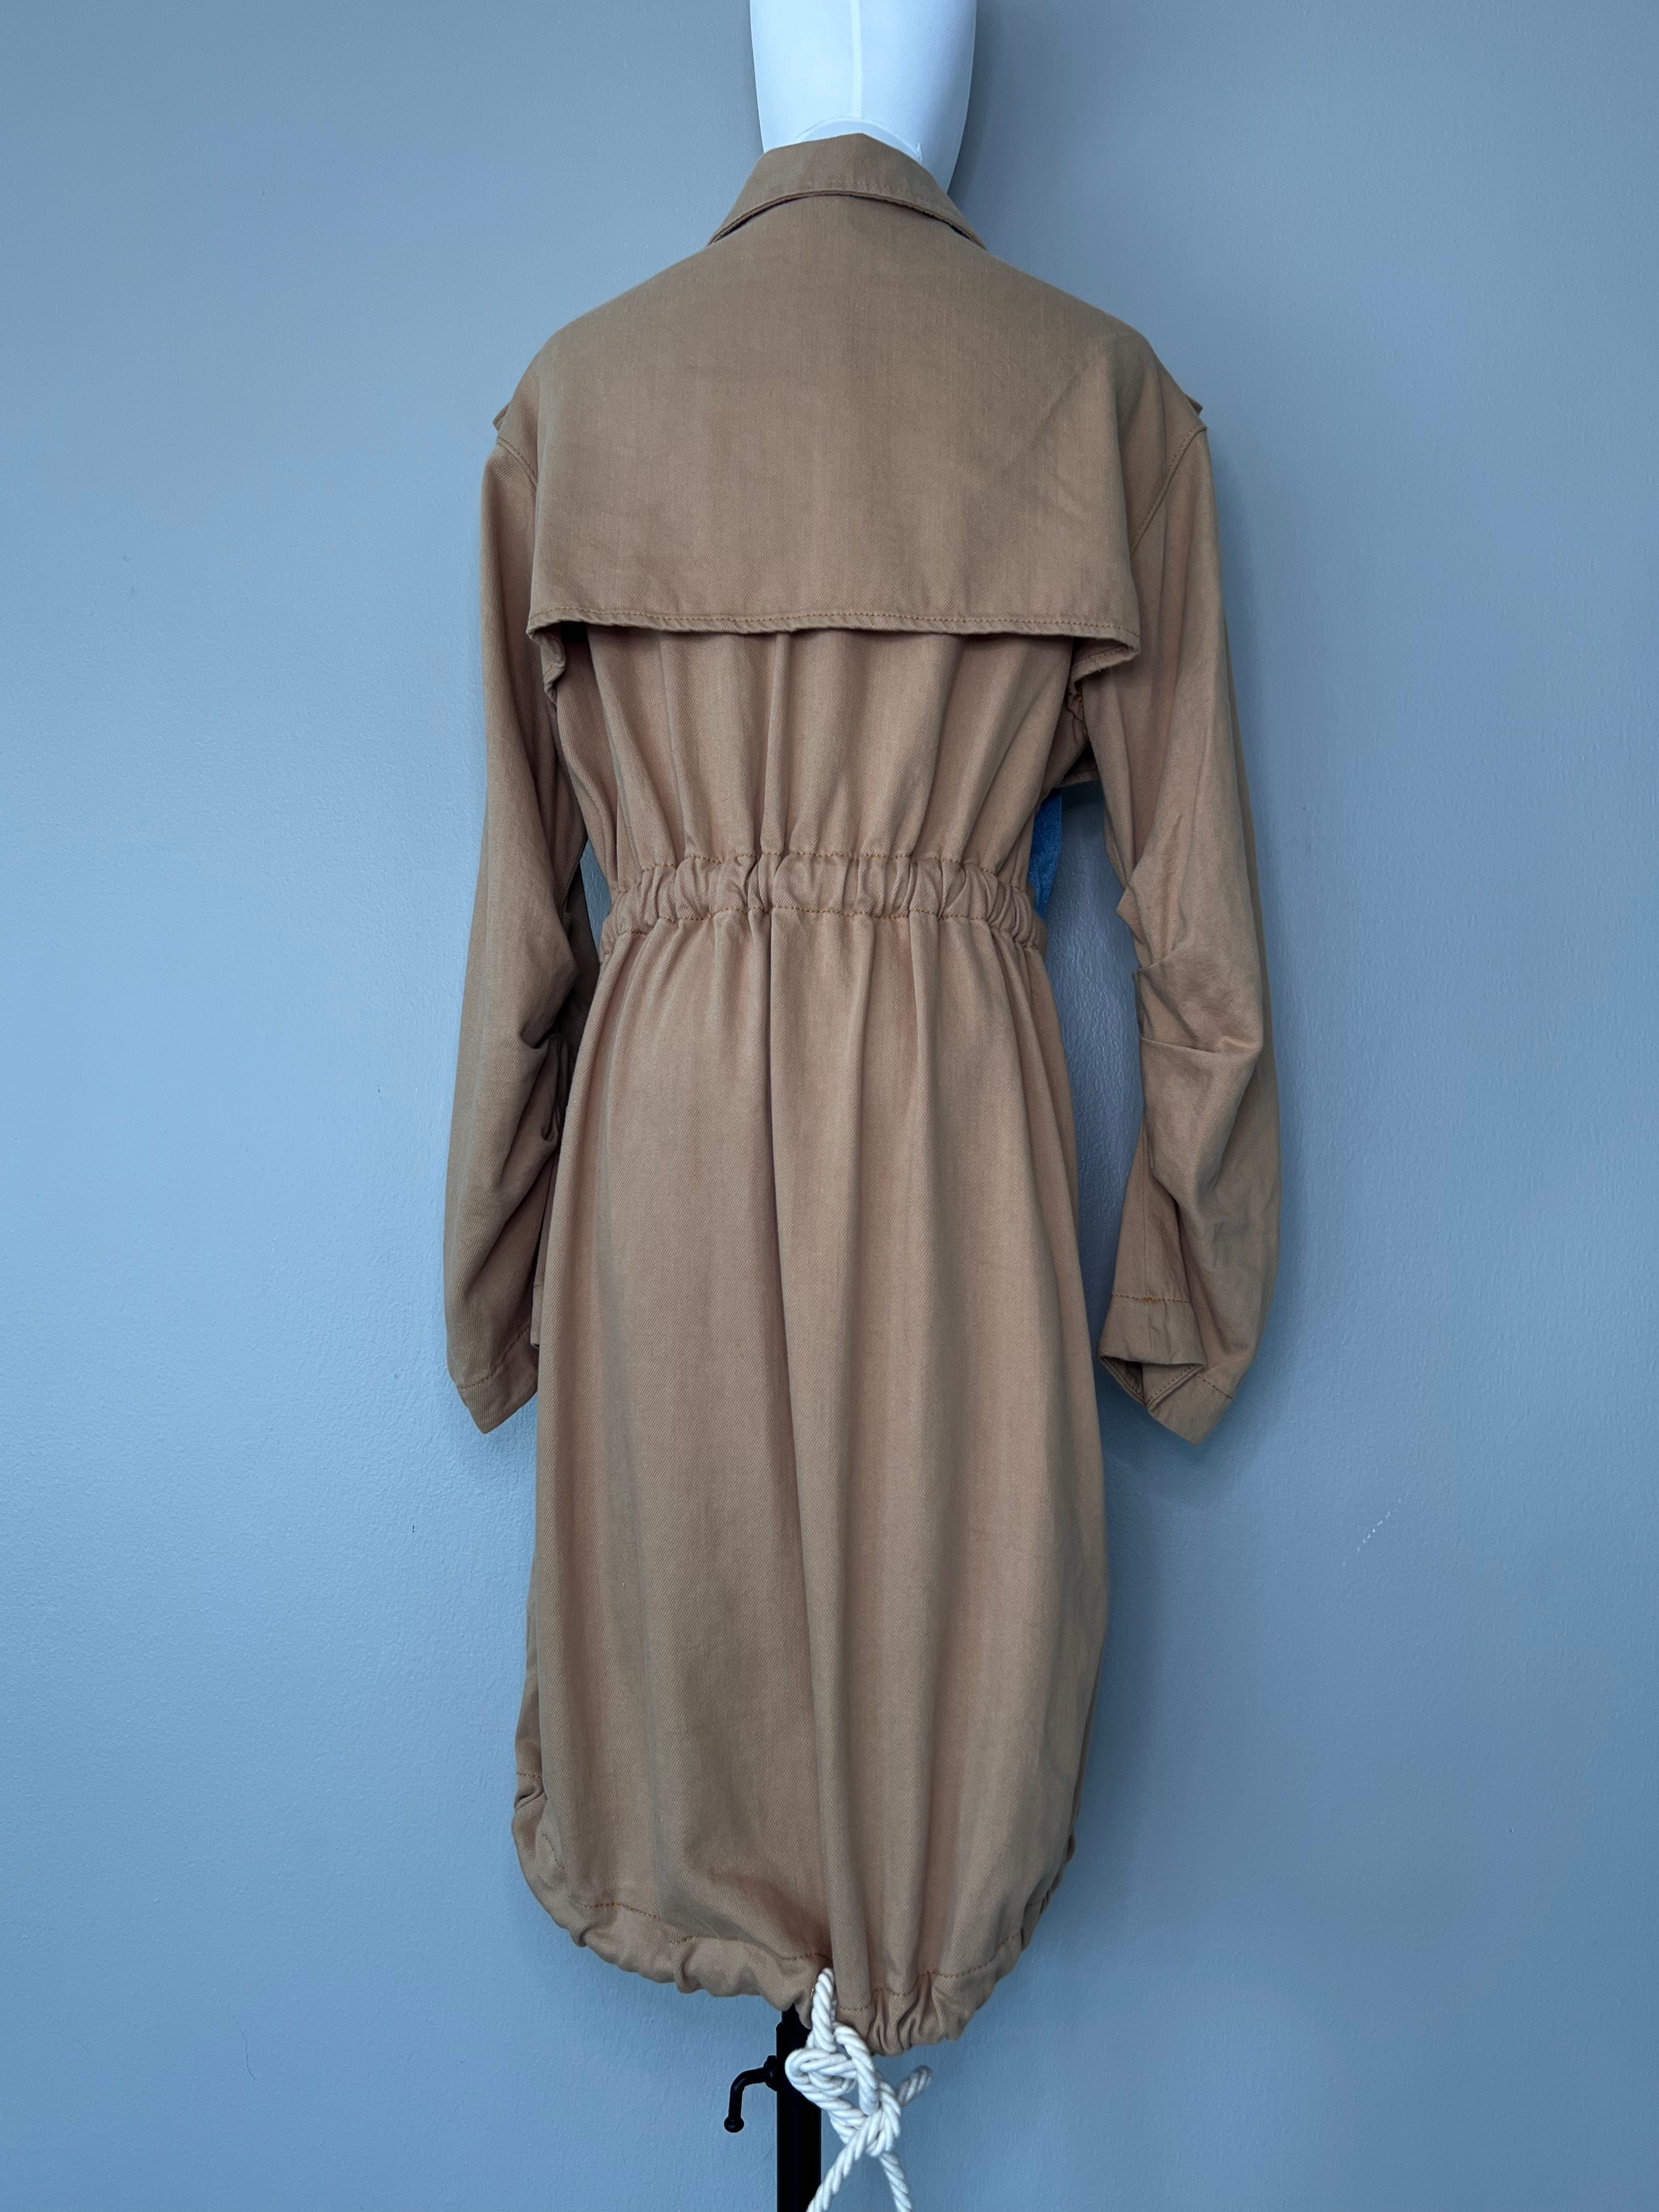 BrandNew! Denim button-up layered with brown jacket drape dress - ELISABETTA FRANCHI